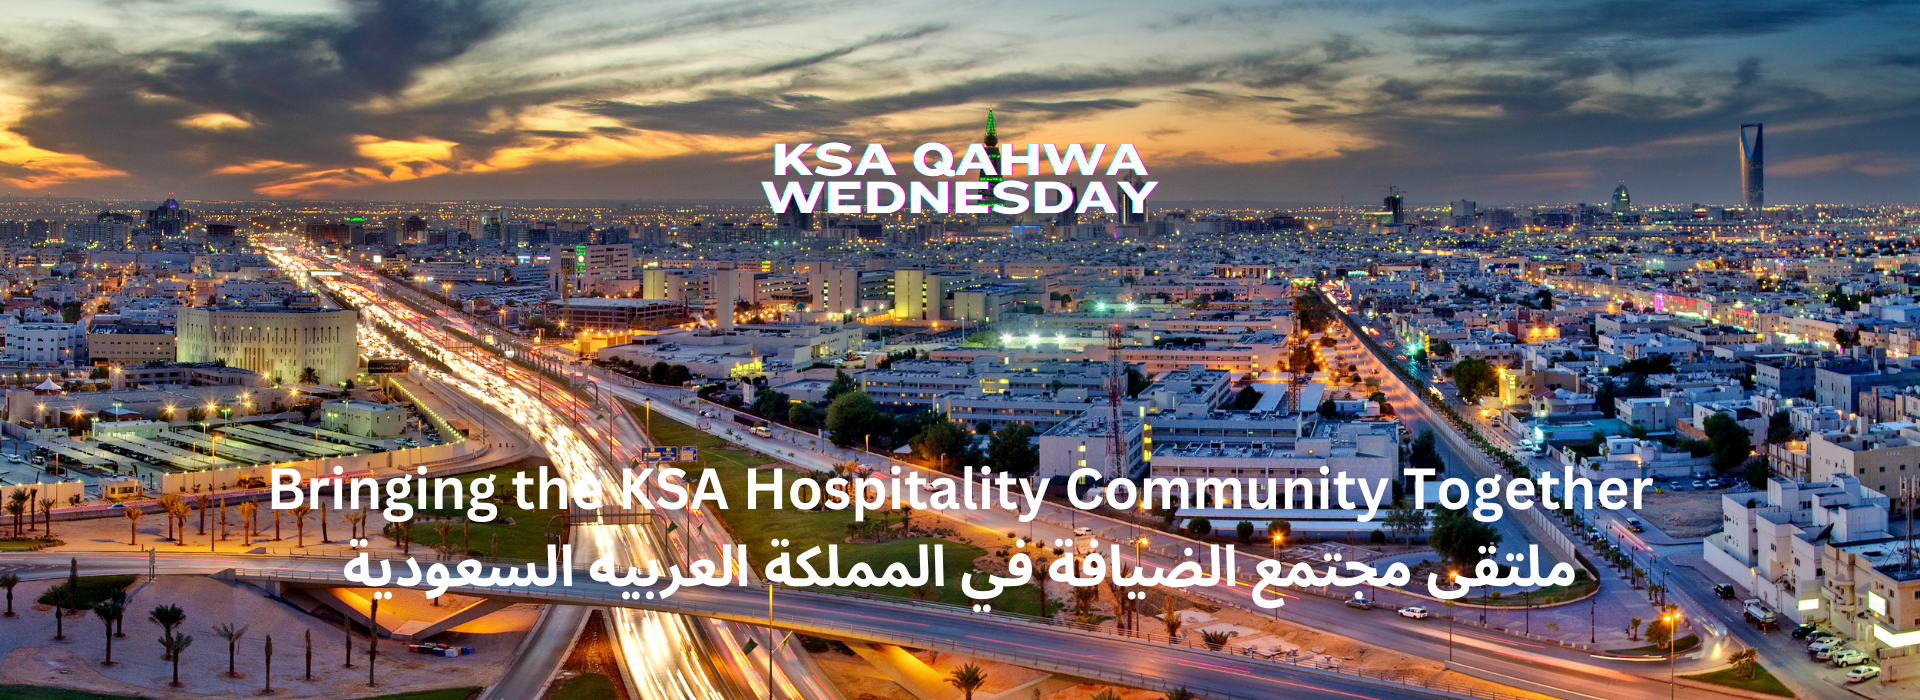 KSA-Qahwa-Wednesday-banner